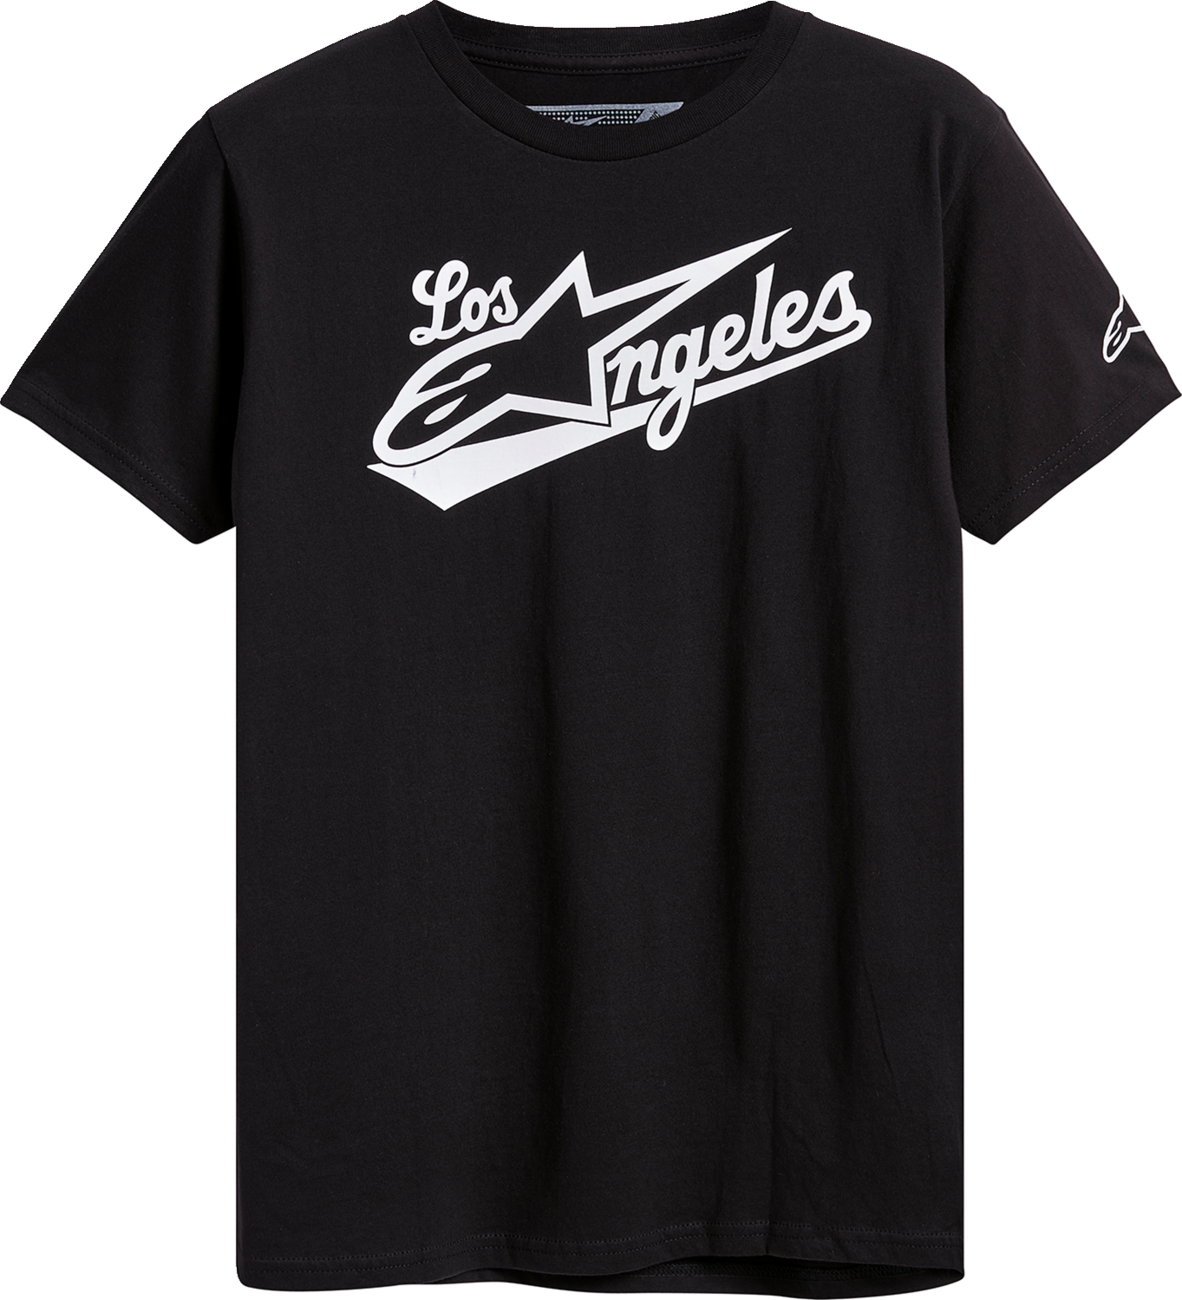 ALPINESTARS Los Angeles T-Shirt - Black - Large 12337222010L